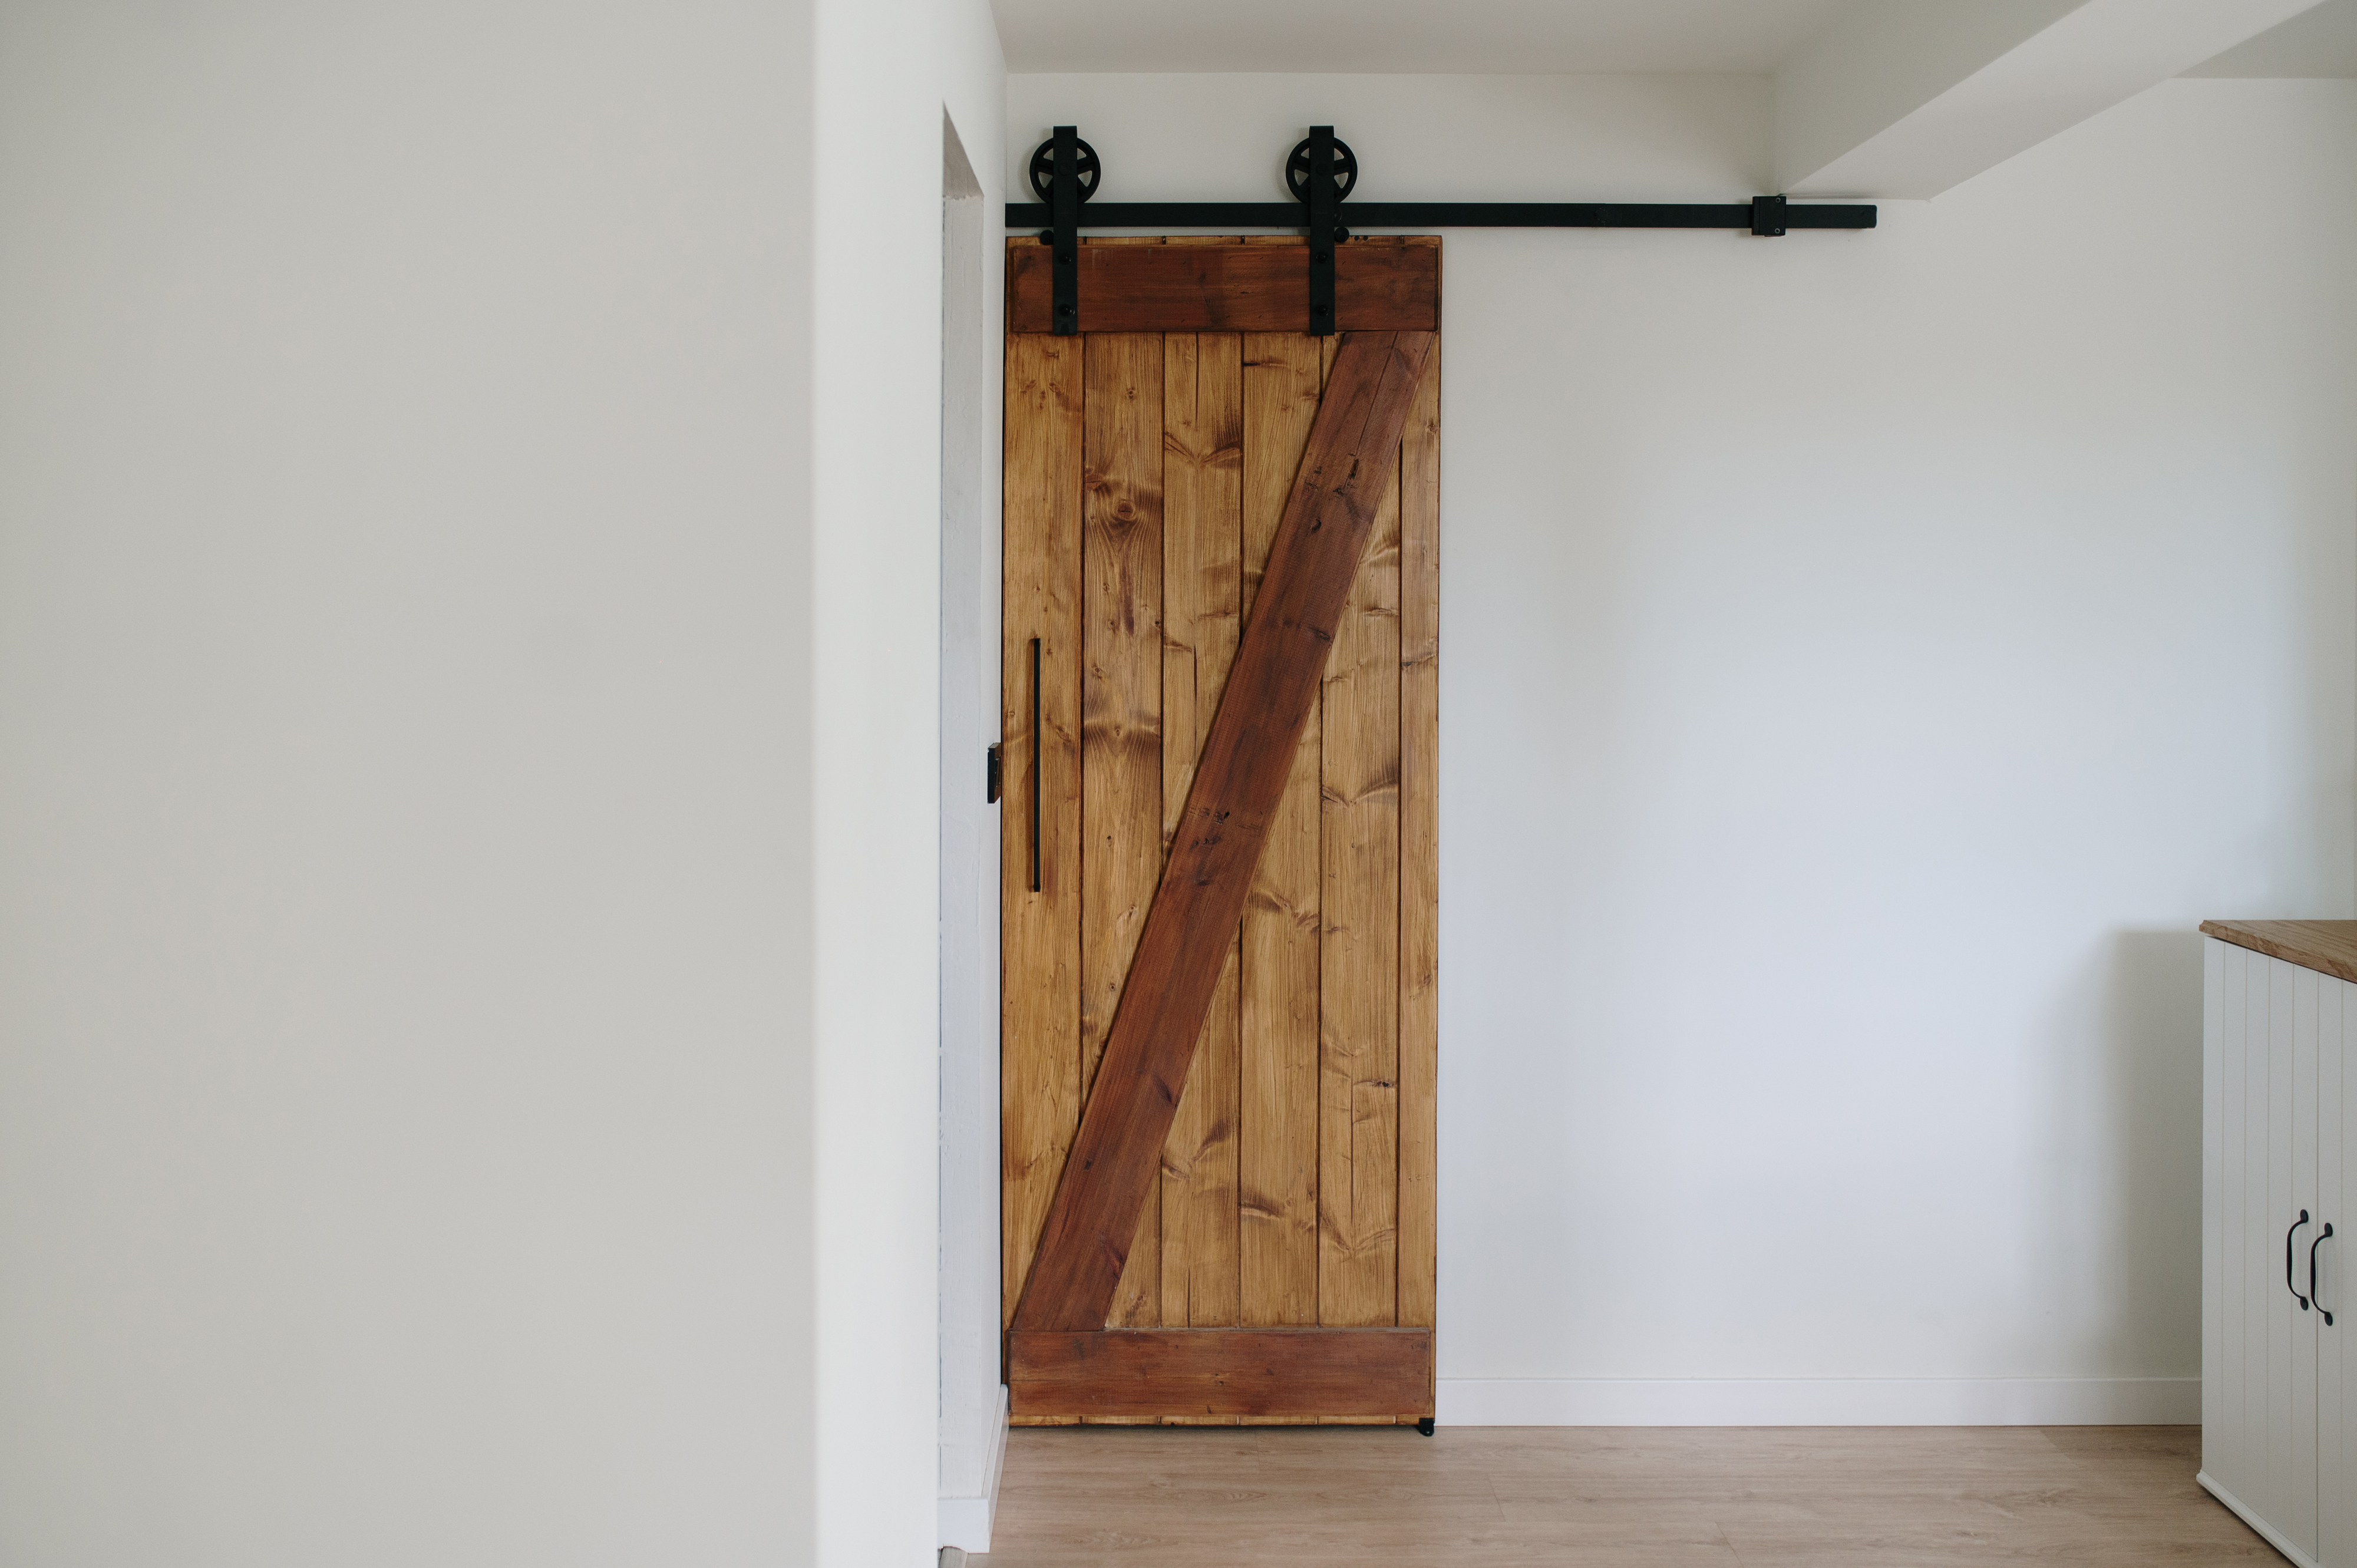 A sliding barn door in a clean, modern interior space